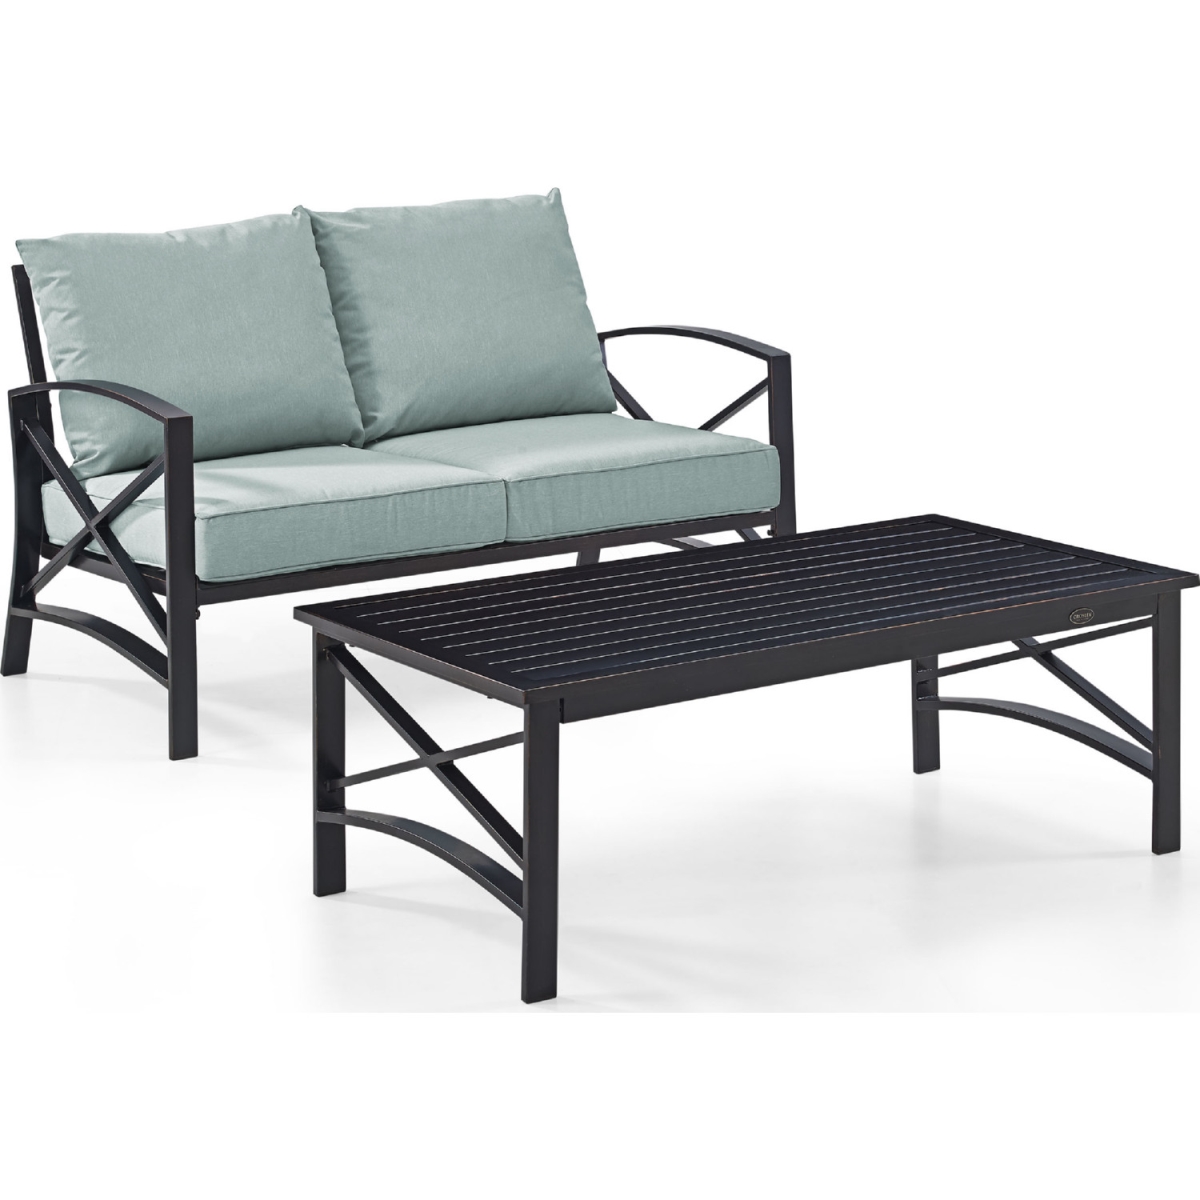 Ko60010bz-mi 2 Piece Kaplan Outdoor Seating Set With Mist Cushion - Loveseat, Coffee Table